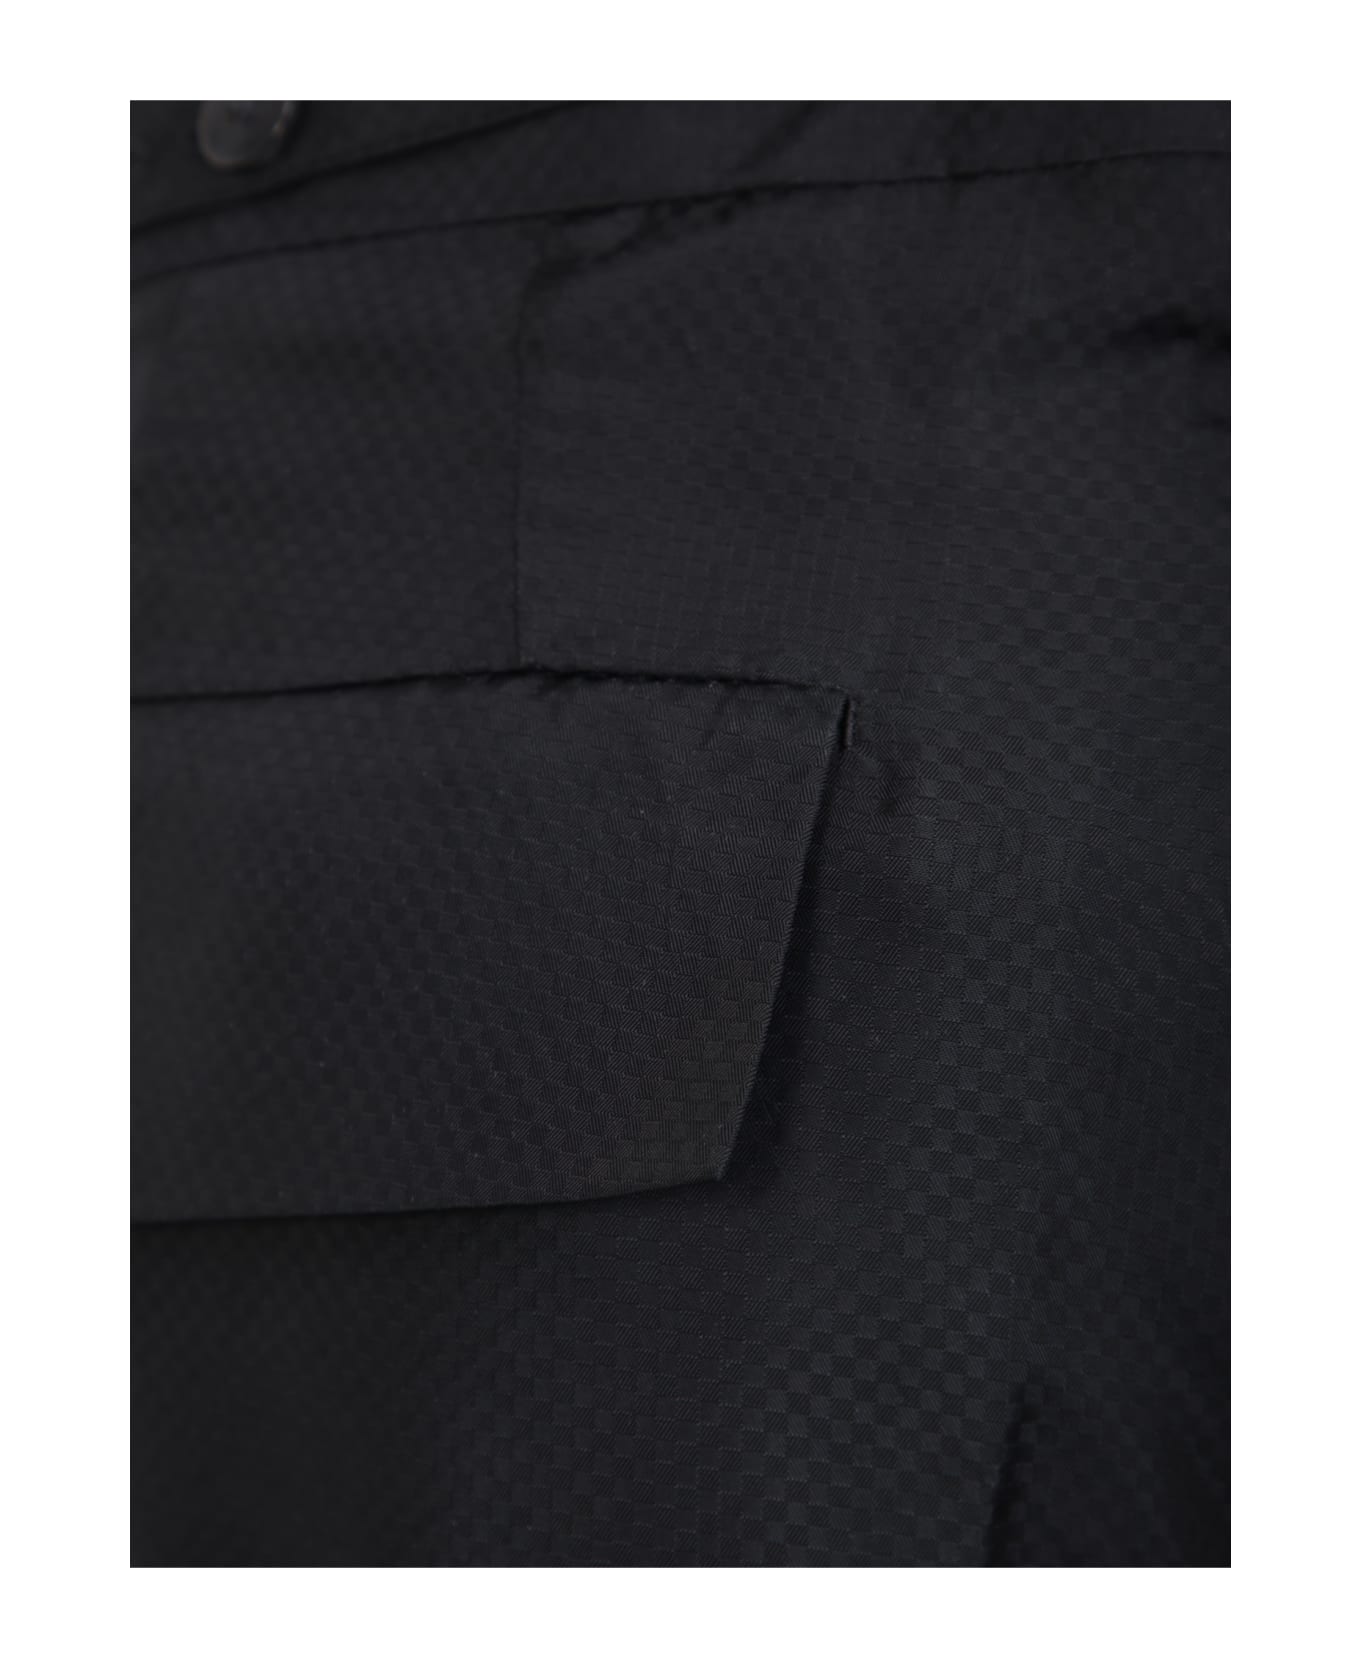 Sapio Straight-leg Tailored Trousers - Black ボトムス